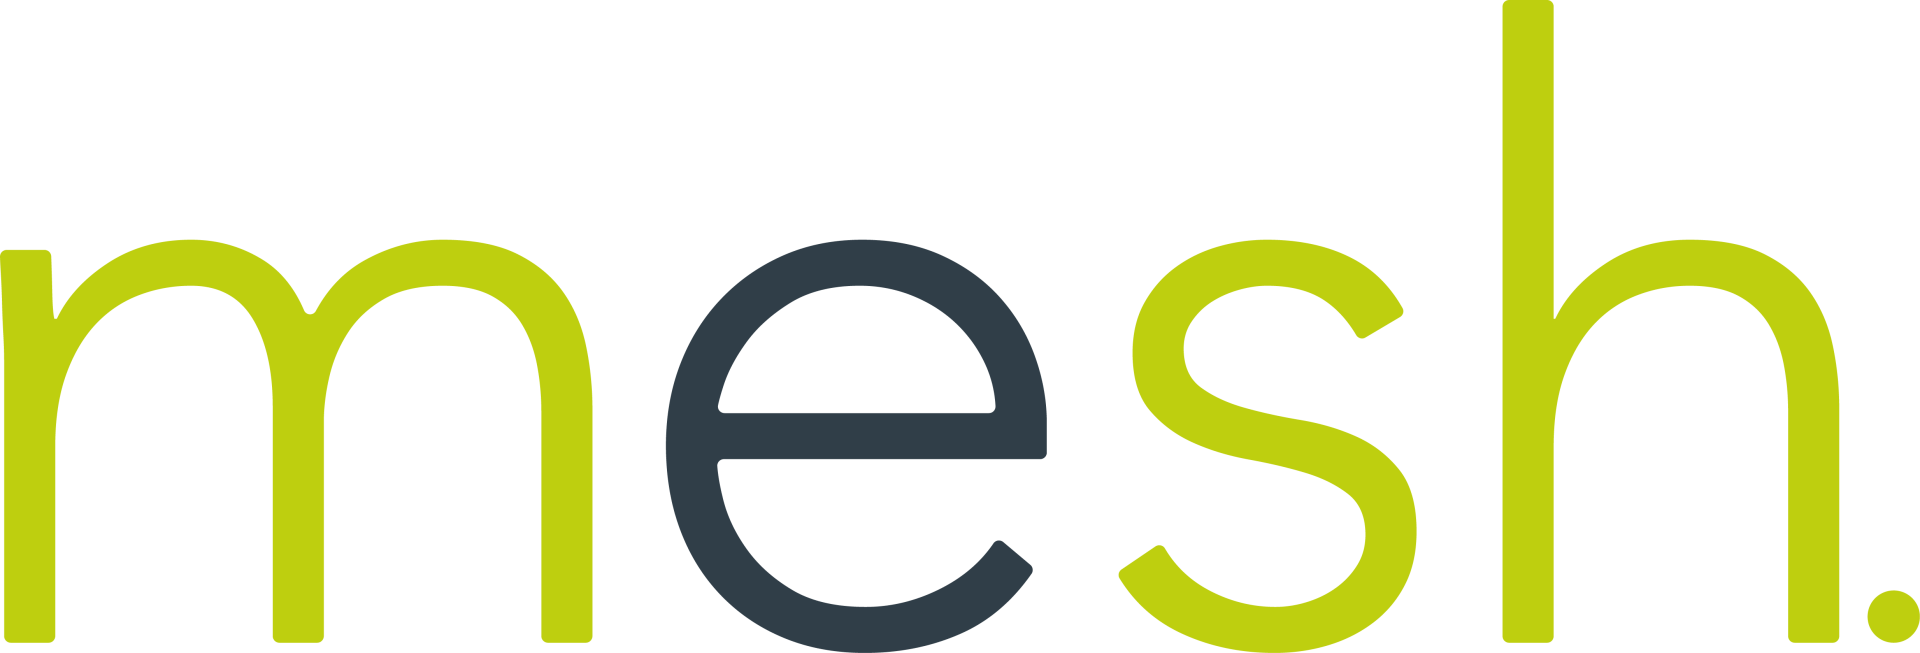 mesh energy logo